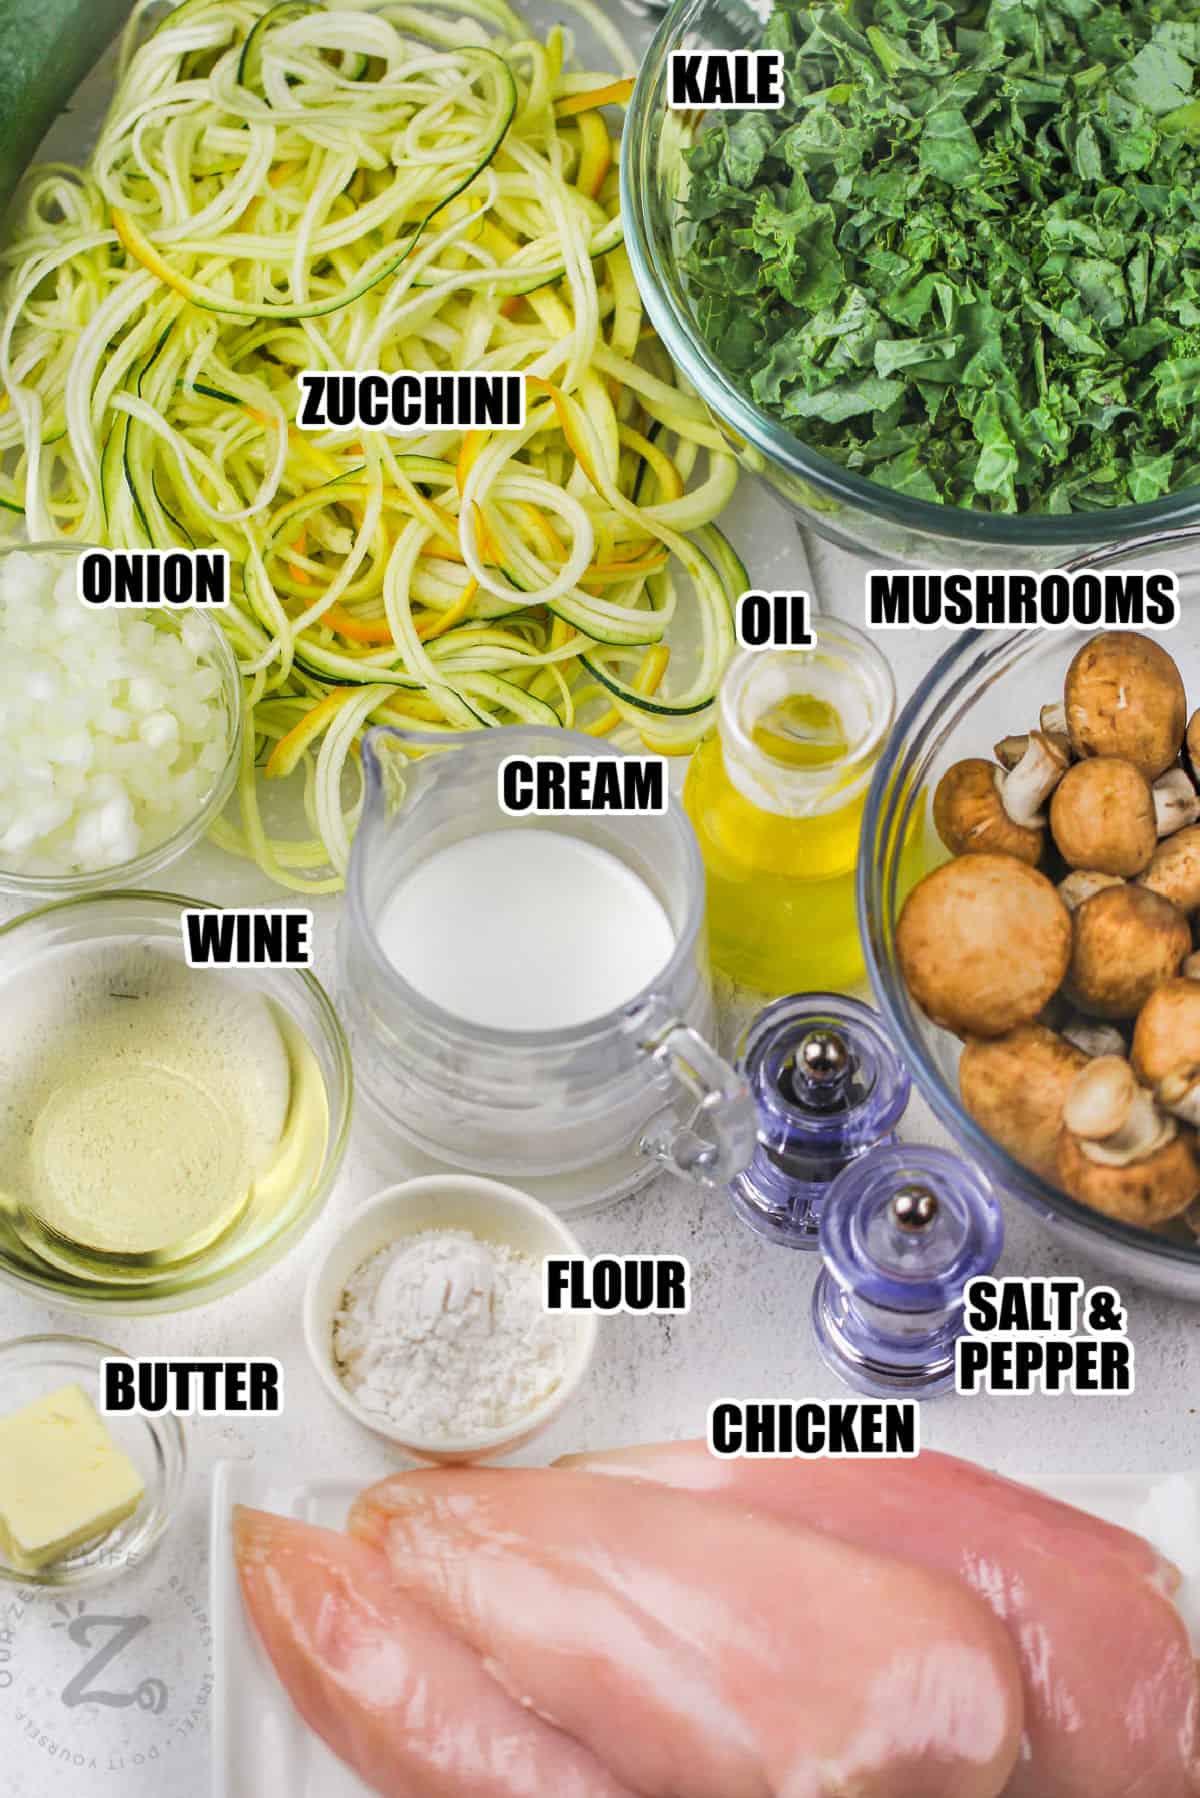 kale , zucchini , onion , cream , mushrooms , oil , wine , flour , butter , chicken and seasonings to make Creamy Chicken and Mushrooms with Kale with labels